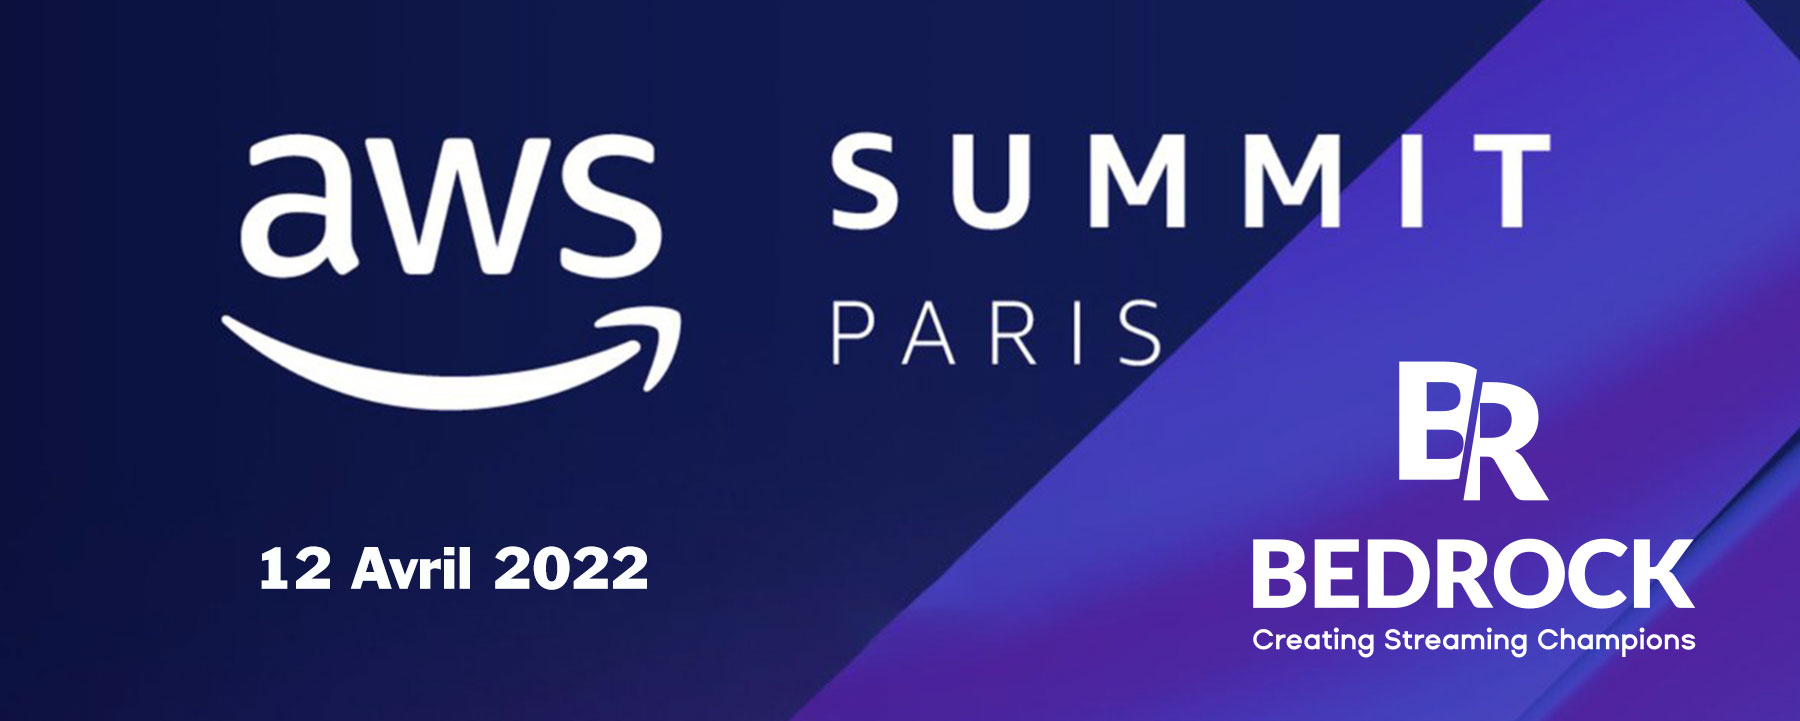 "AWS Summit Paris 2022"